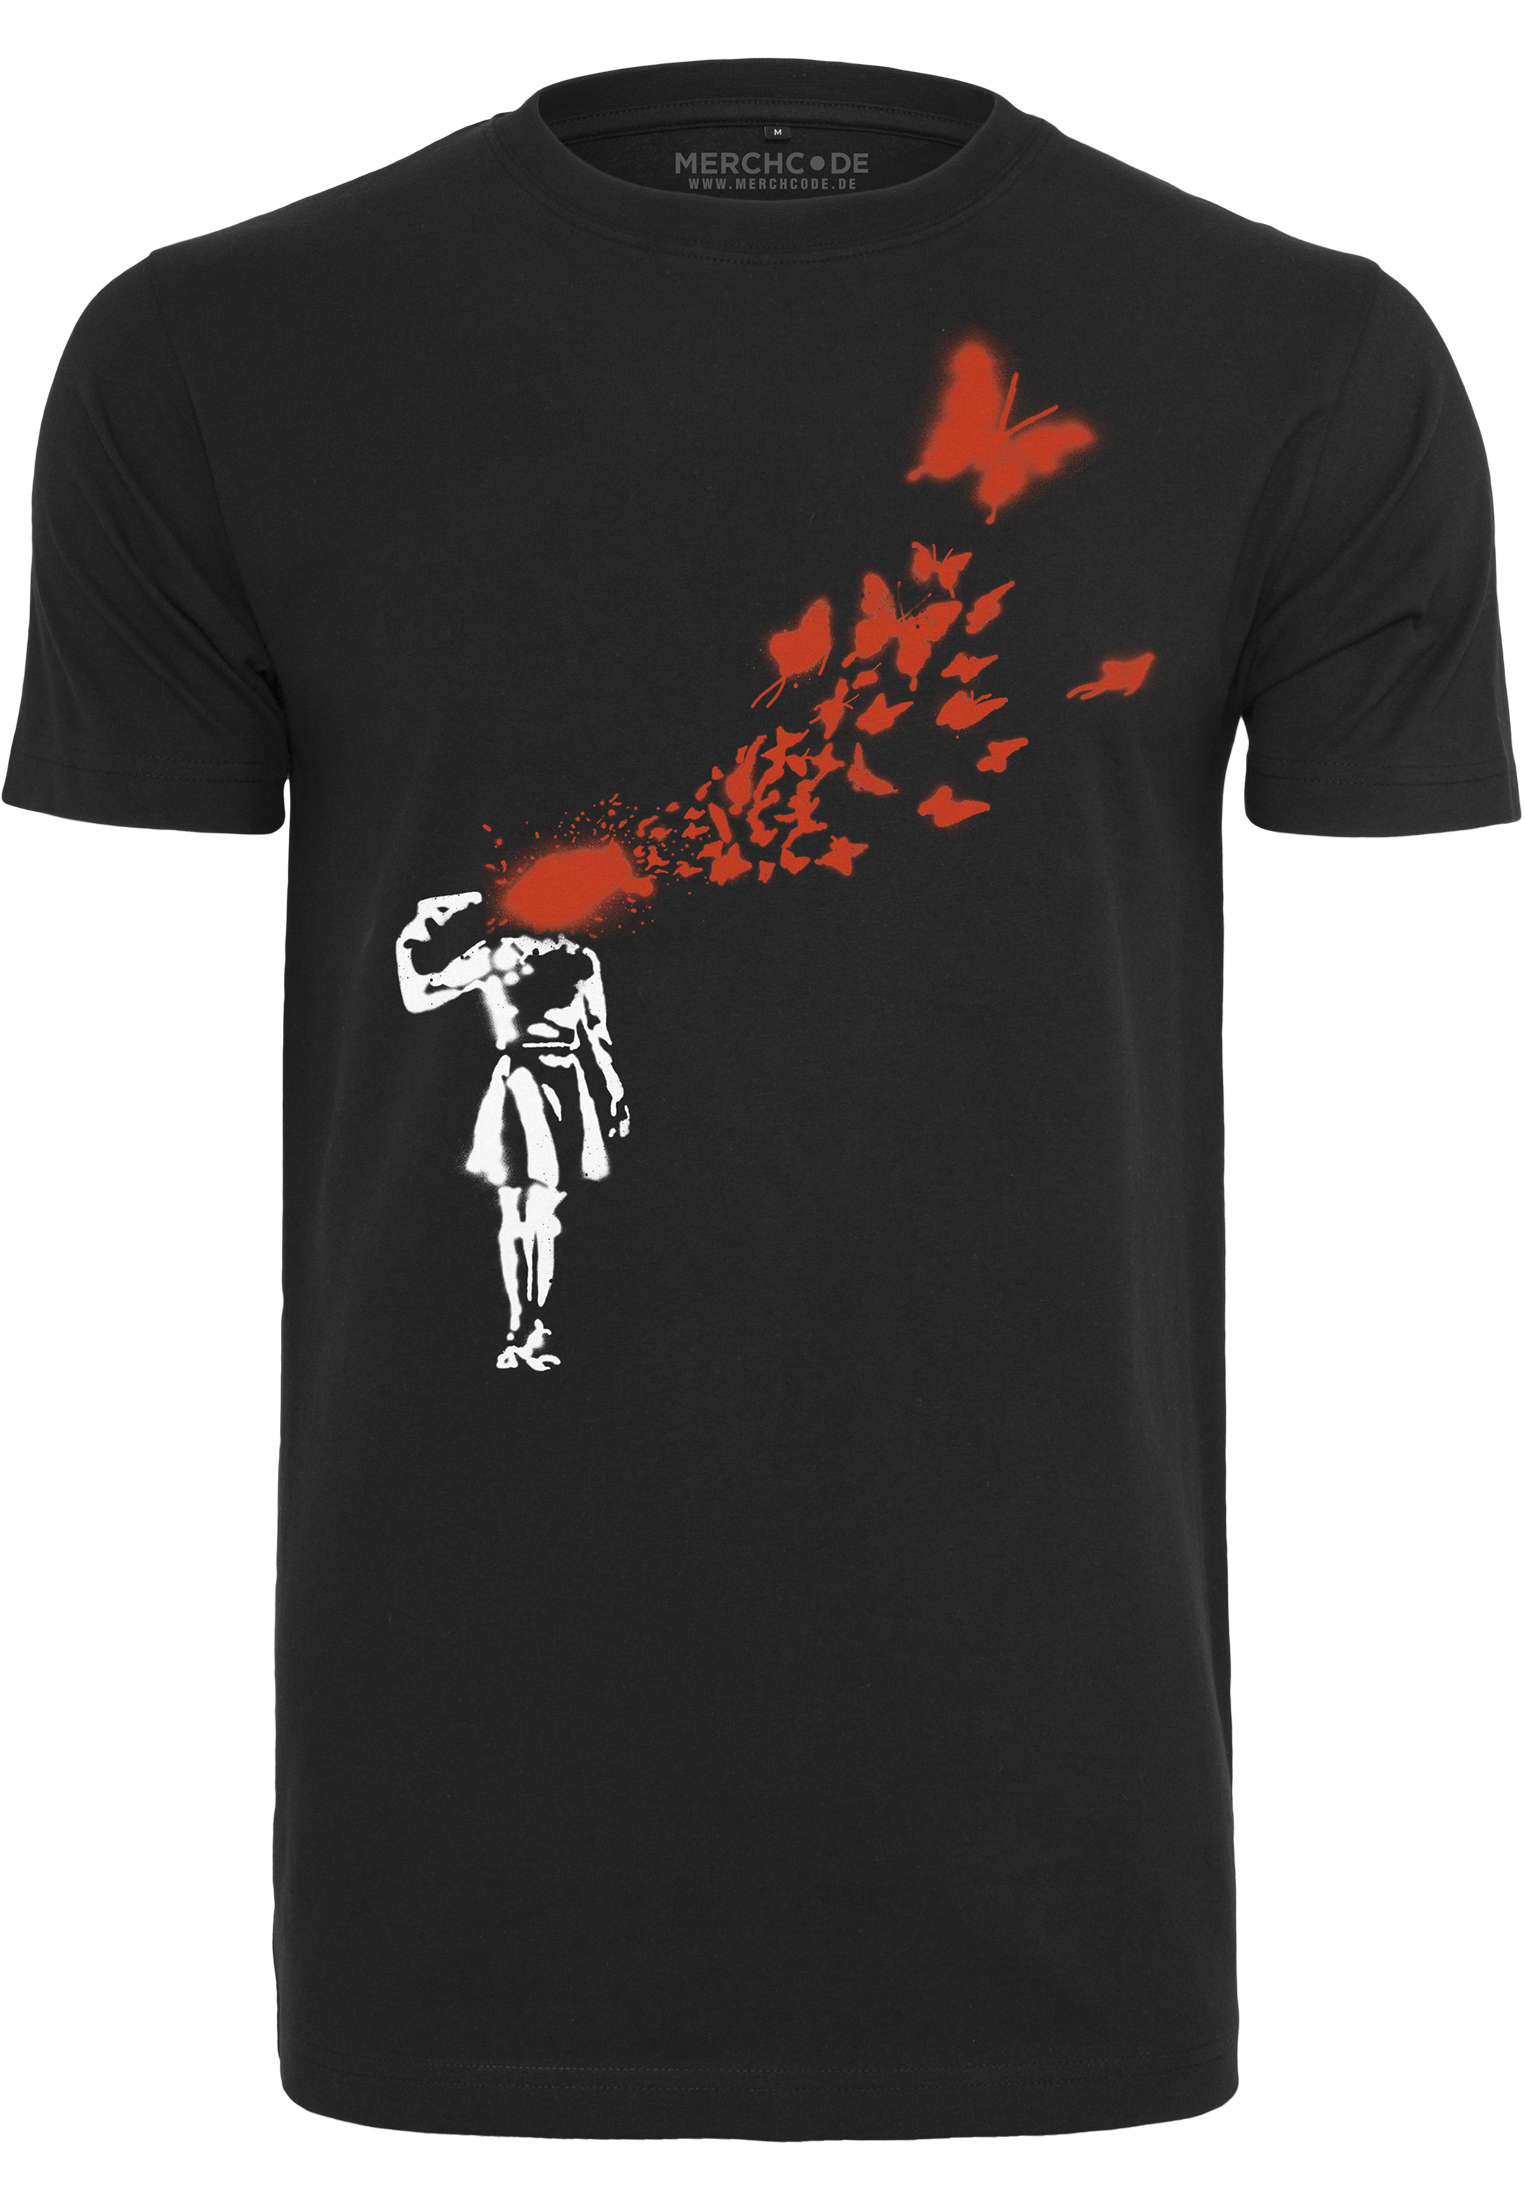 T-Shirts Brandalised - Banksy?s Graffiti Butterfly Tee in Farbe black